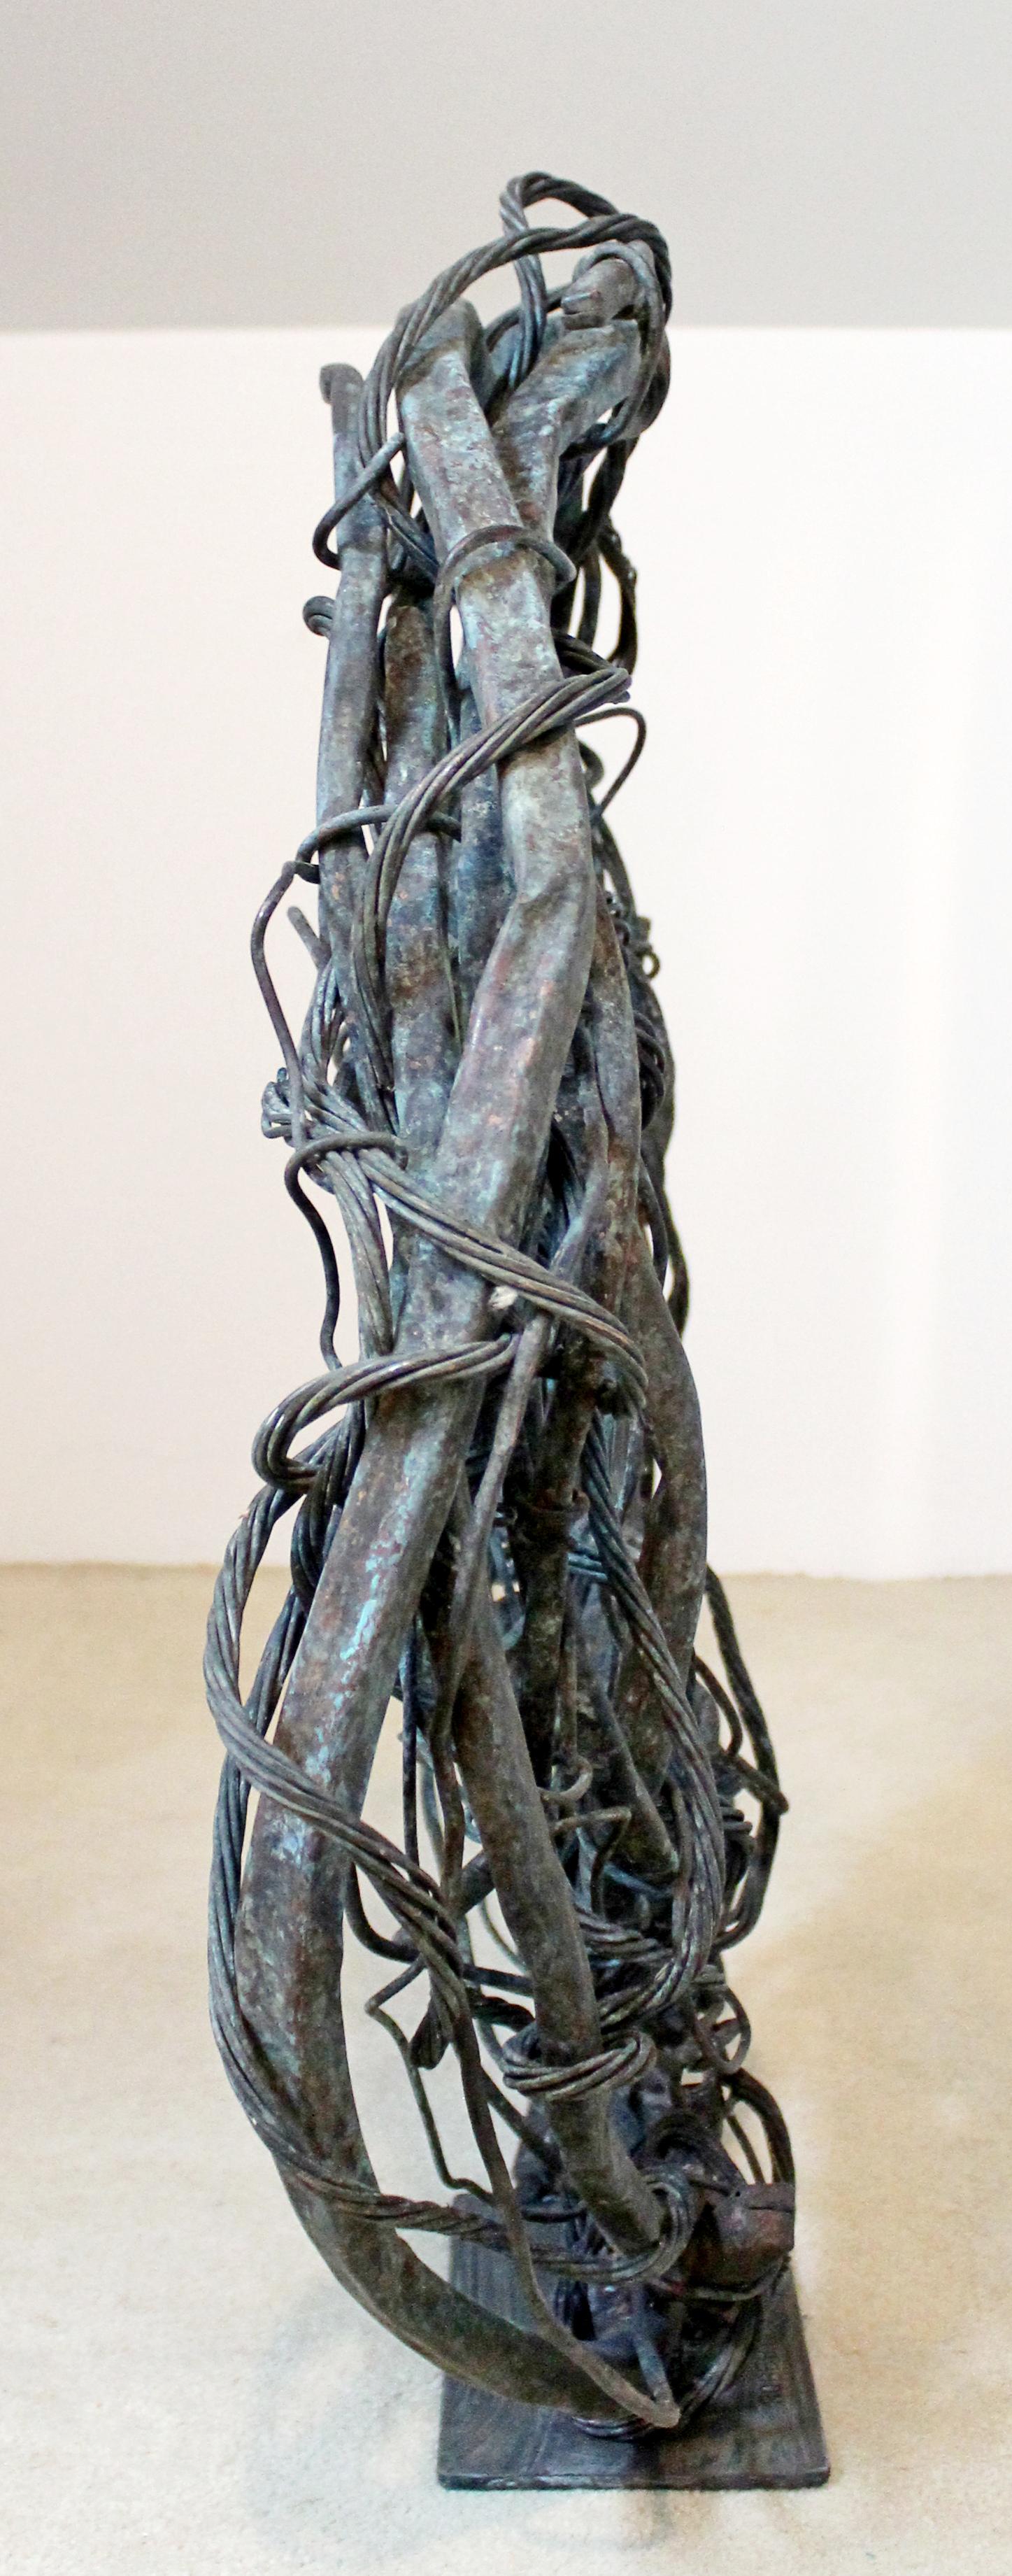 American Contemporary Round Copper Metal Abstract Table Sculpture Robert Hansen, 2020